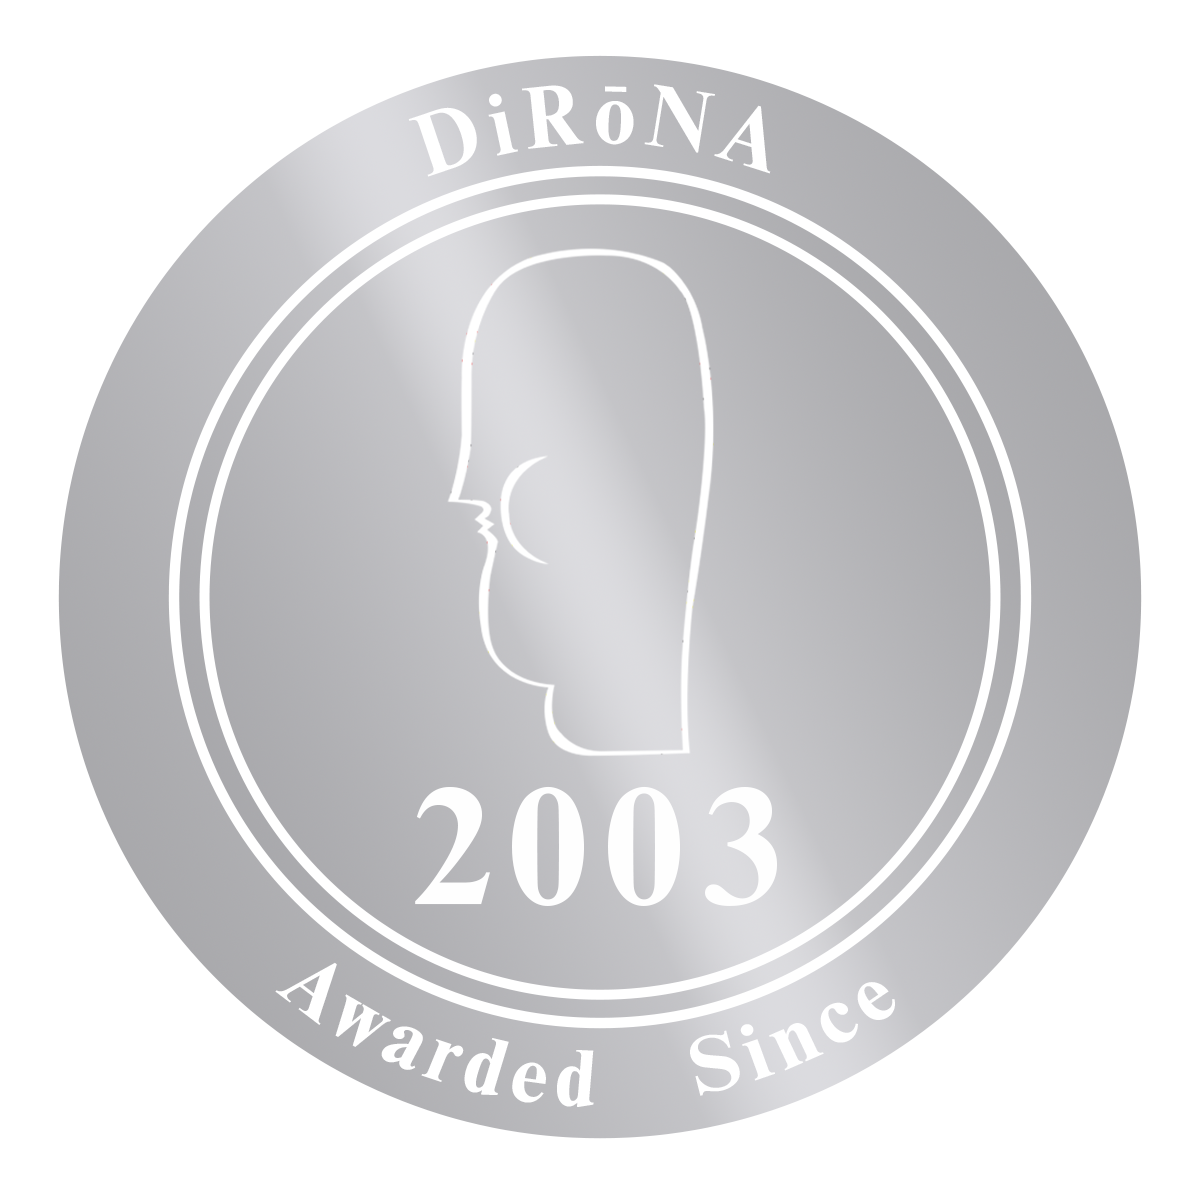 DiRoNA Awarded Restaurant Distinguished Restaurants of North America 801 Chophouse Since 2003 Badge